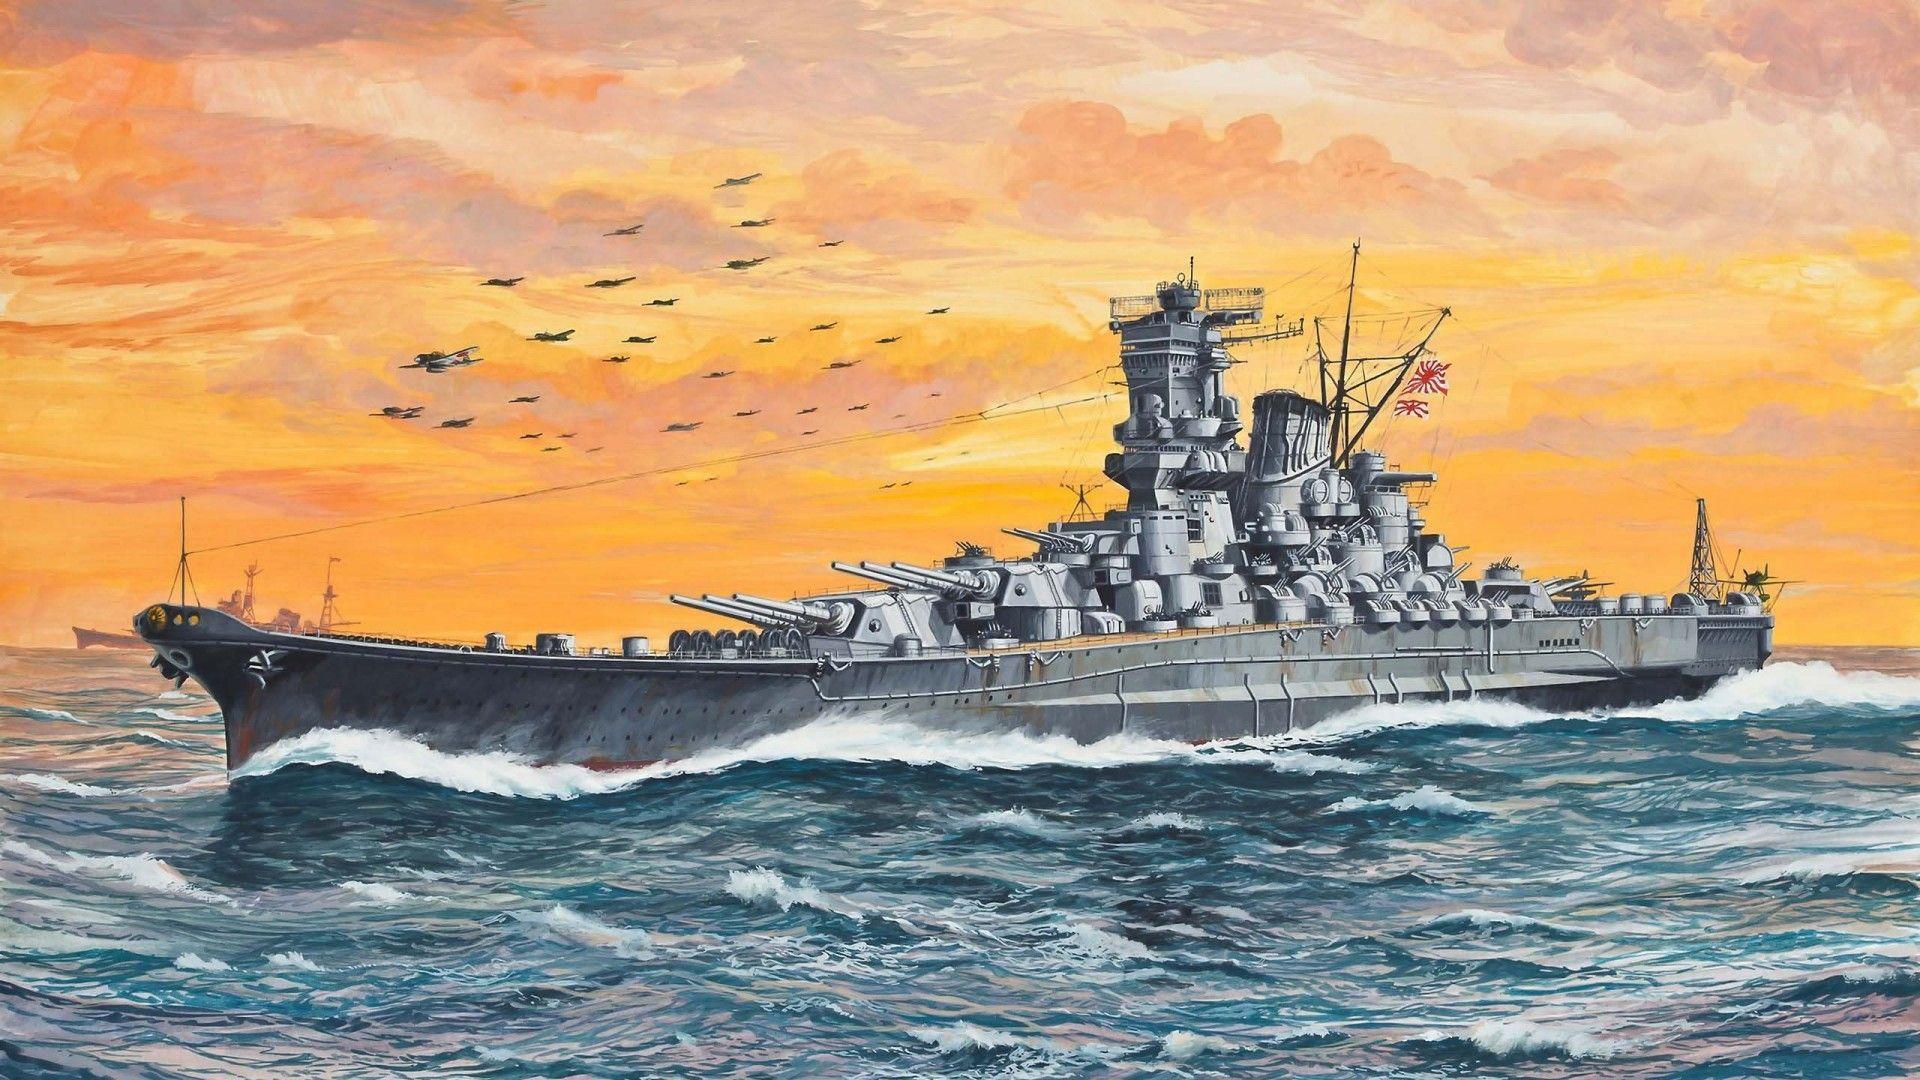 Best Navy Ships HD Wallpaper Free Download. NEW HD Wallpaper